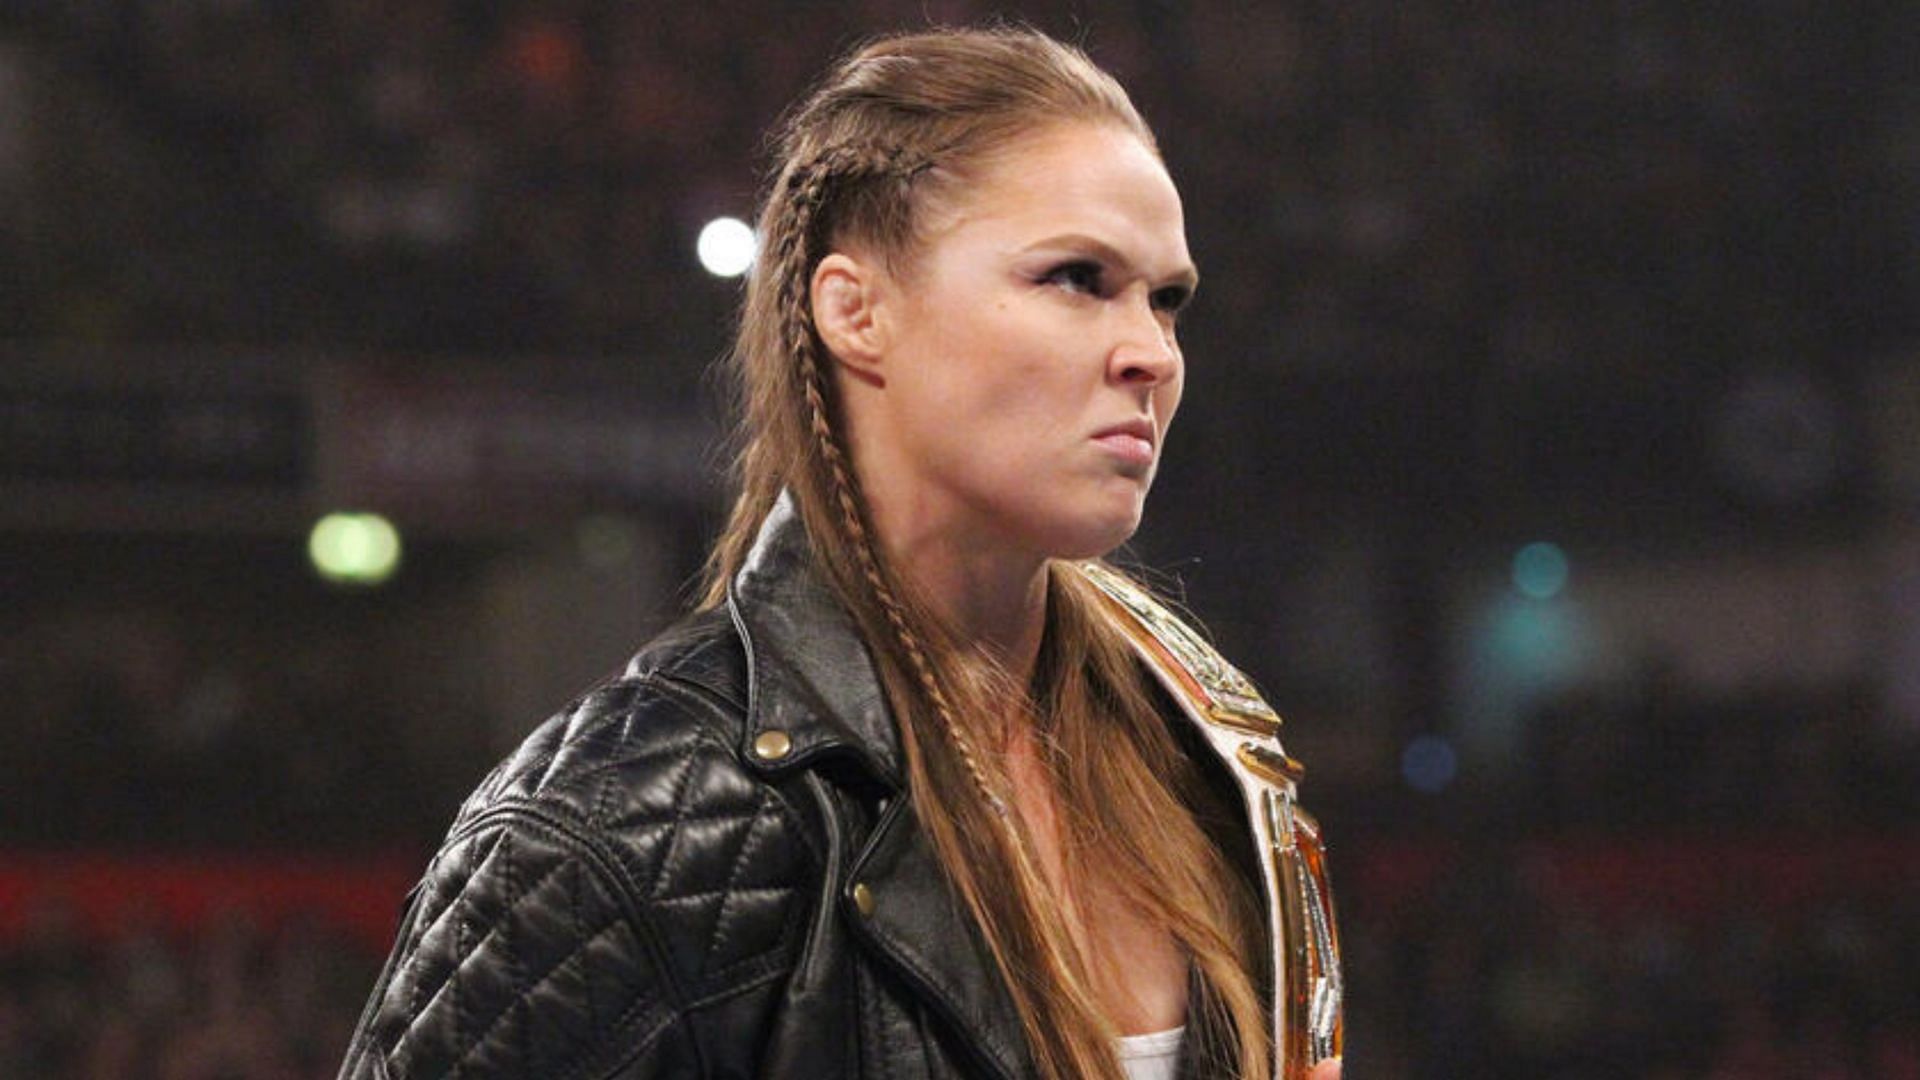 Former WWE Superstar Ronda Rousey